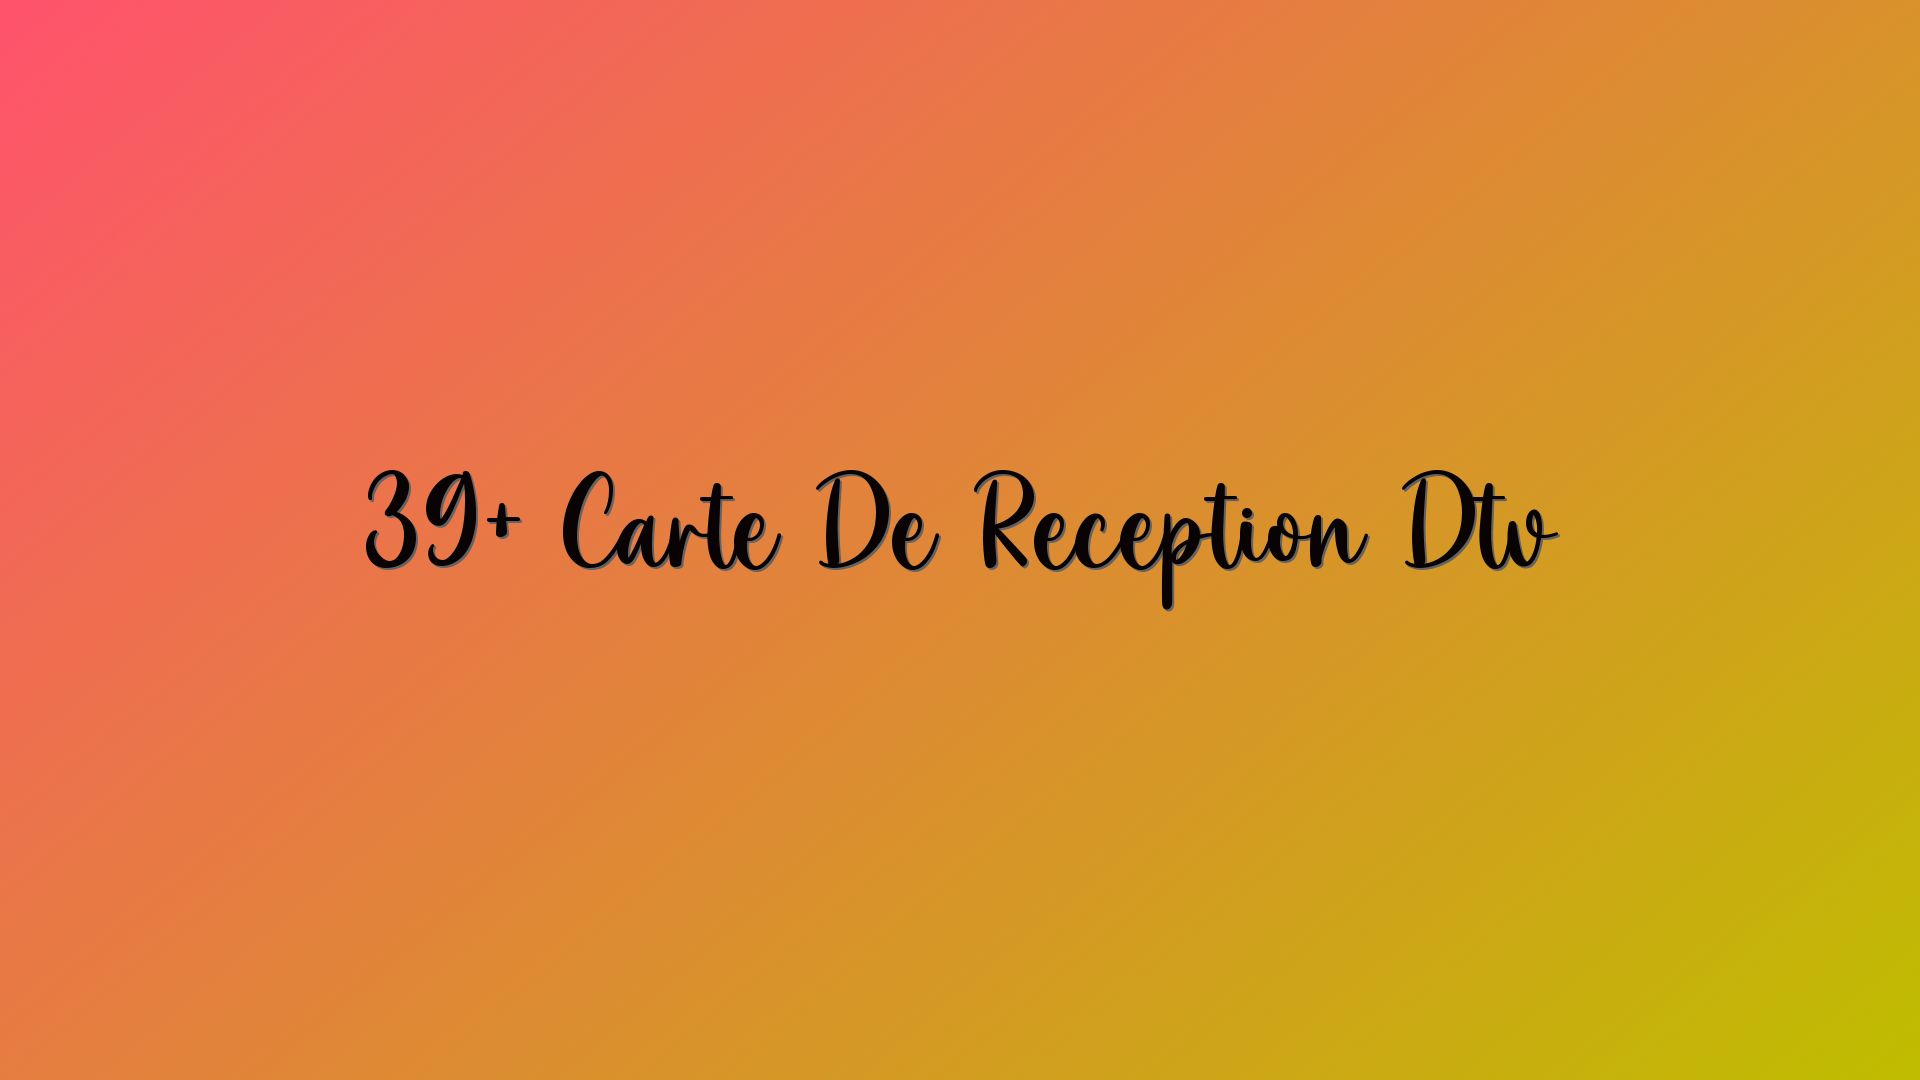 39+ Carte De Reception Dtv